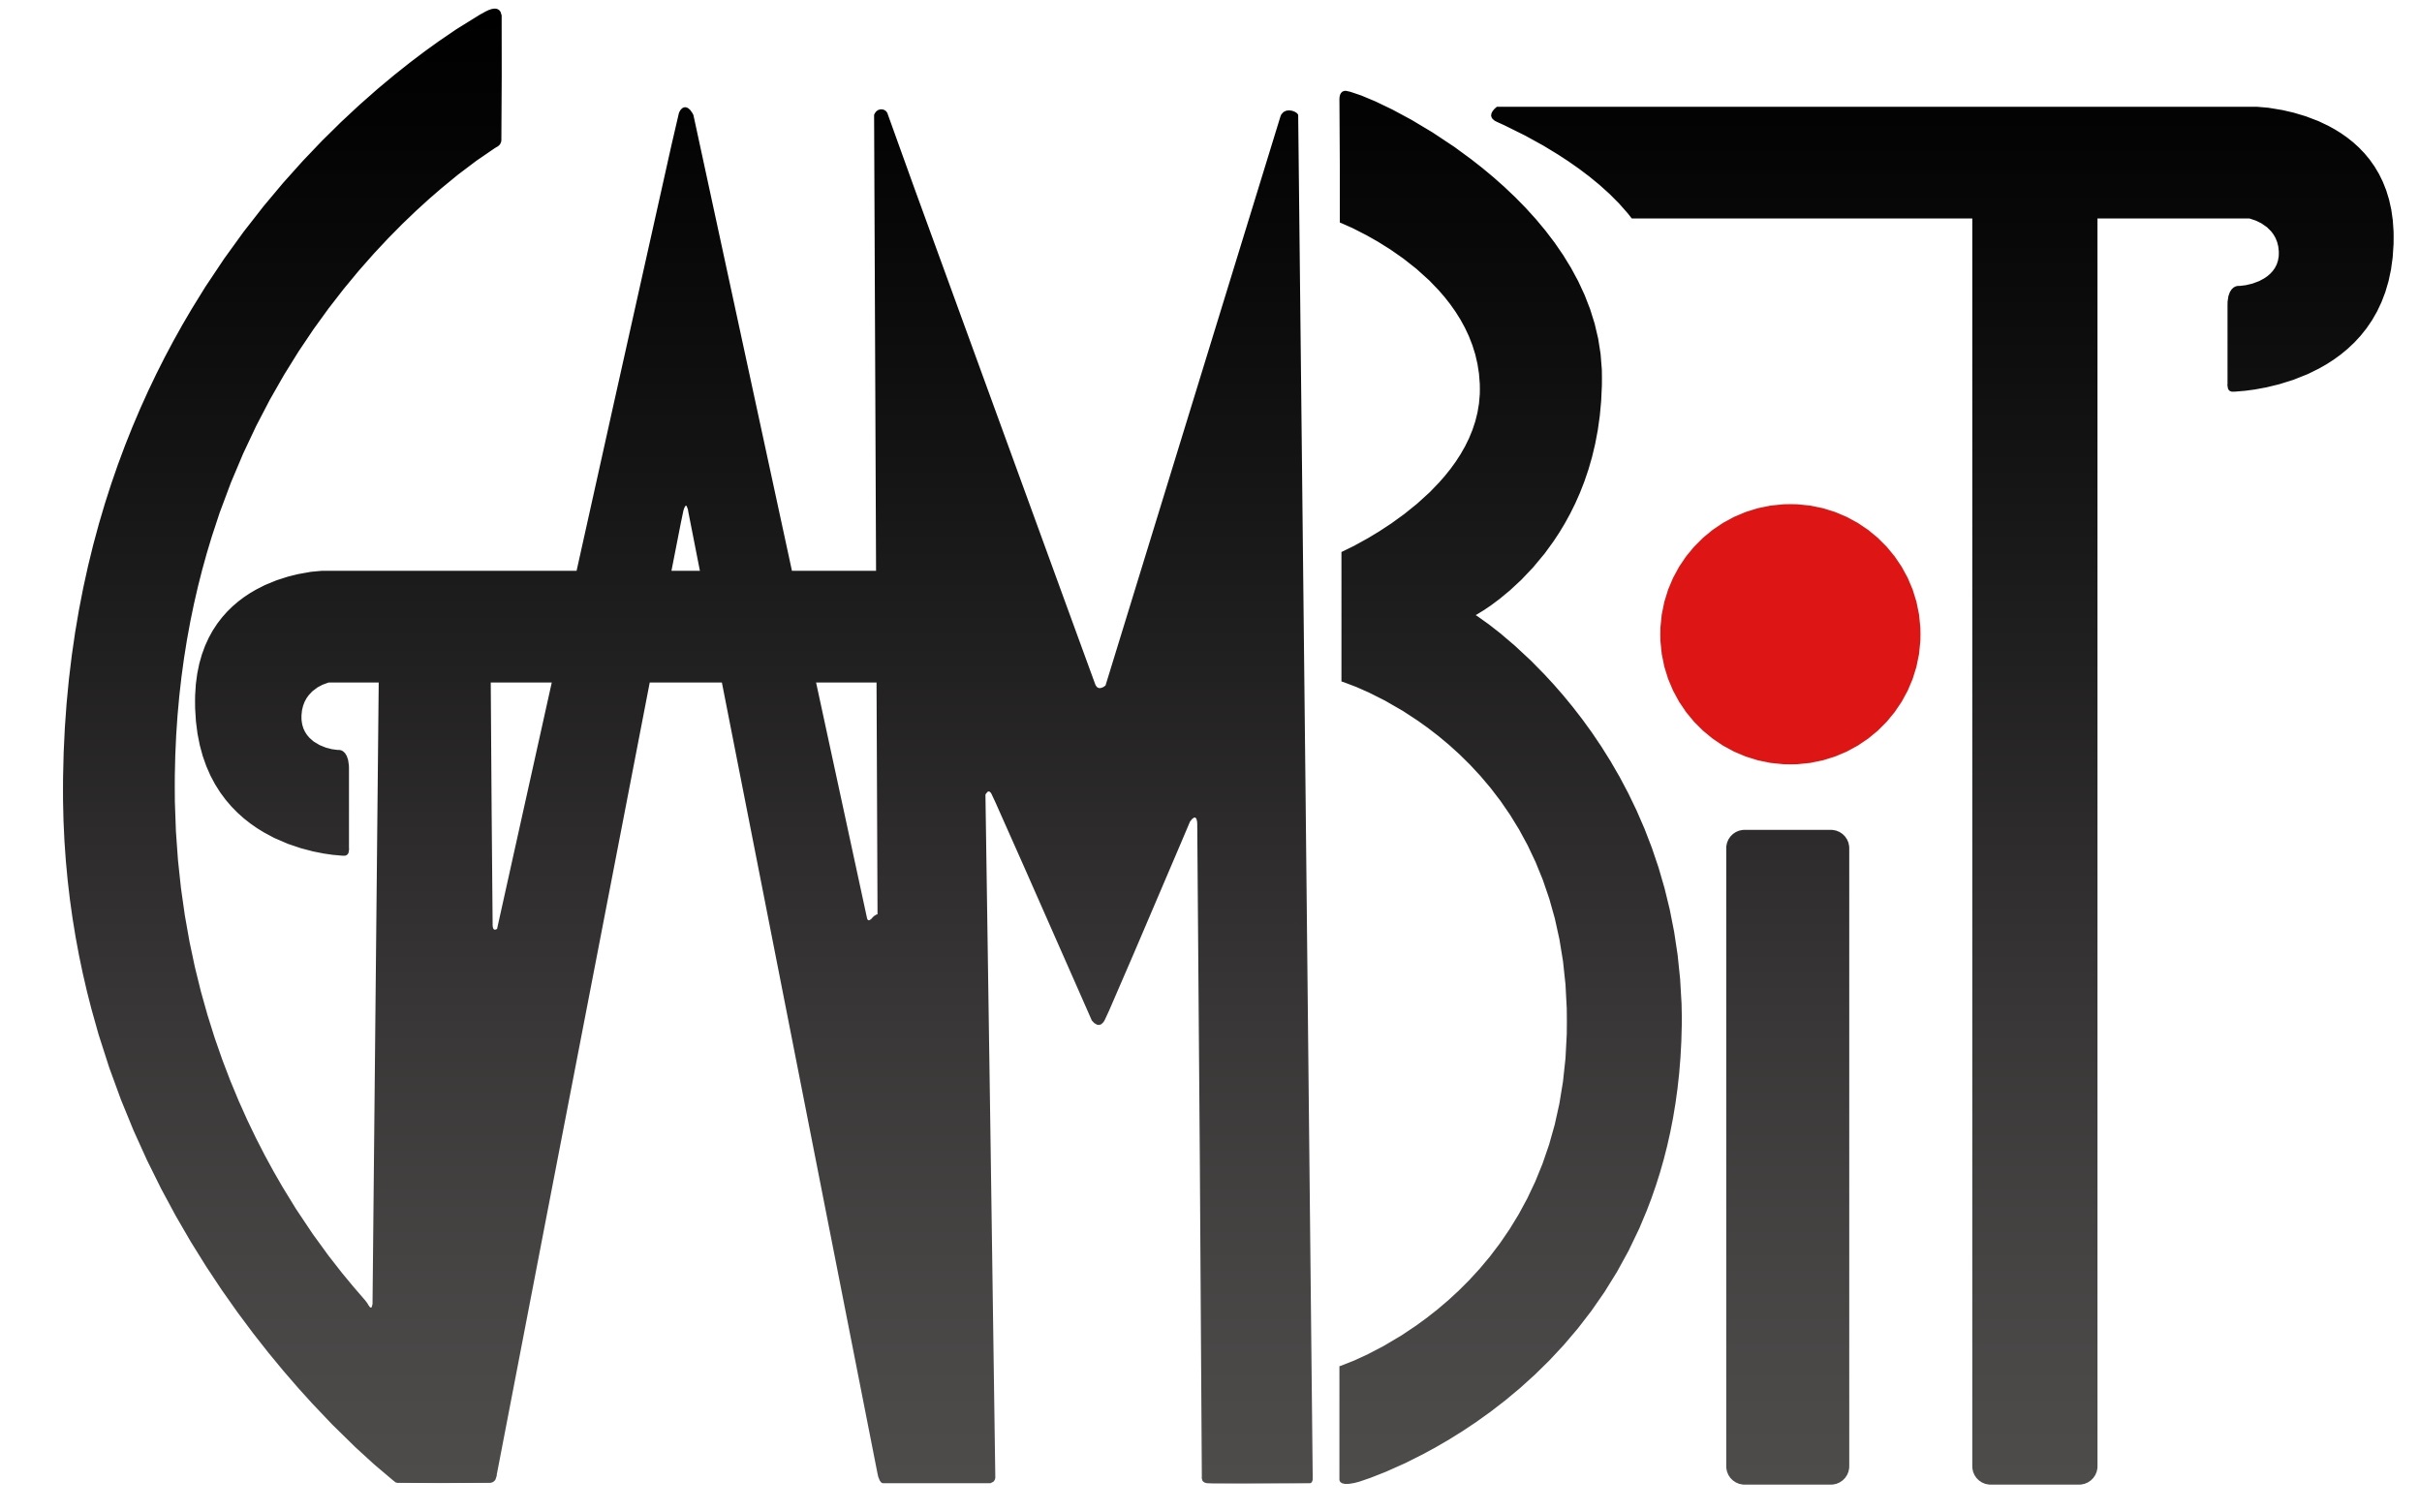 GAMBIT Logo.jpg f4bf9942fb8d0aec15e047eefbe31766